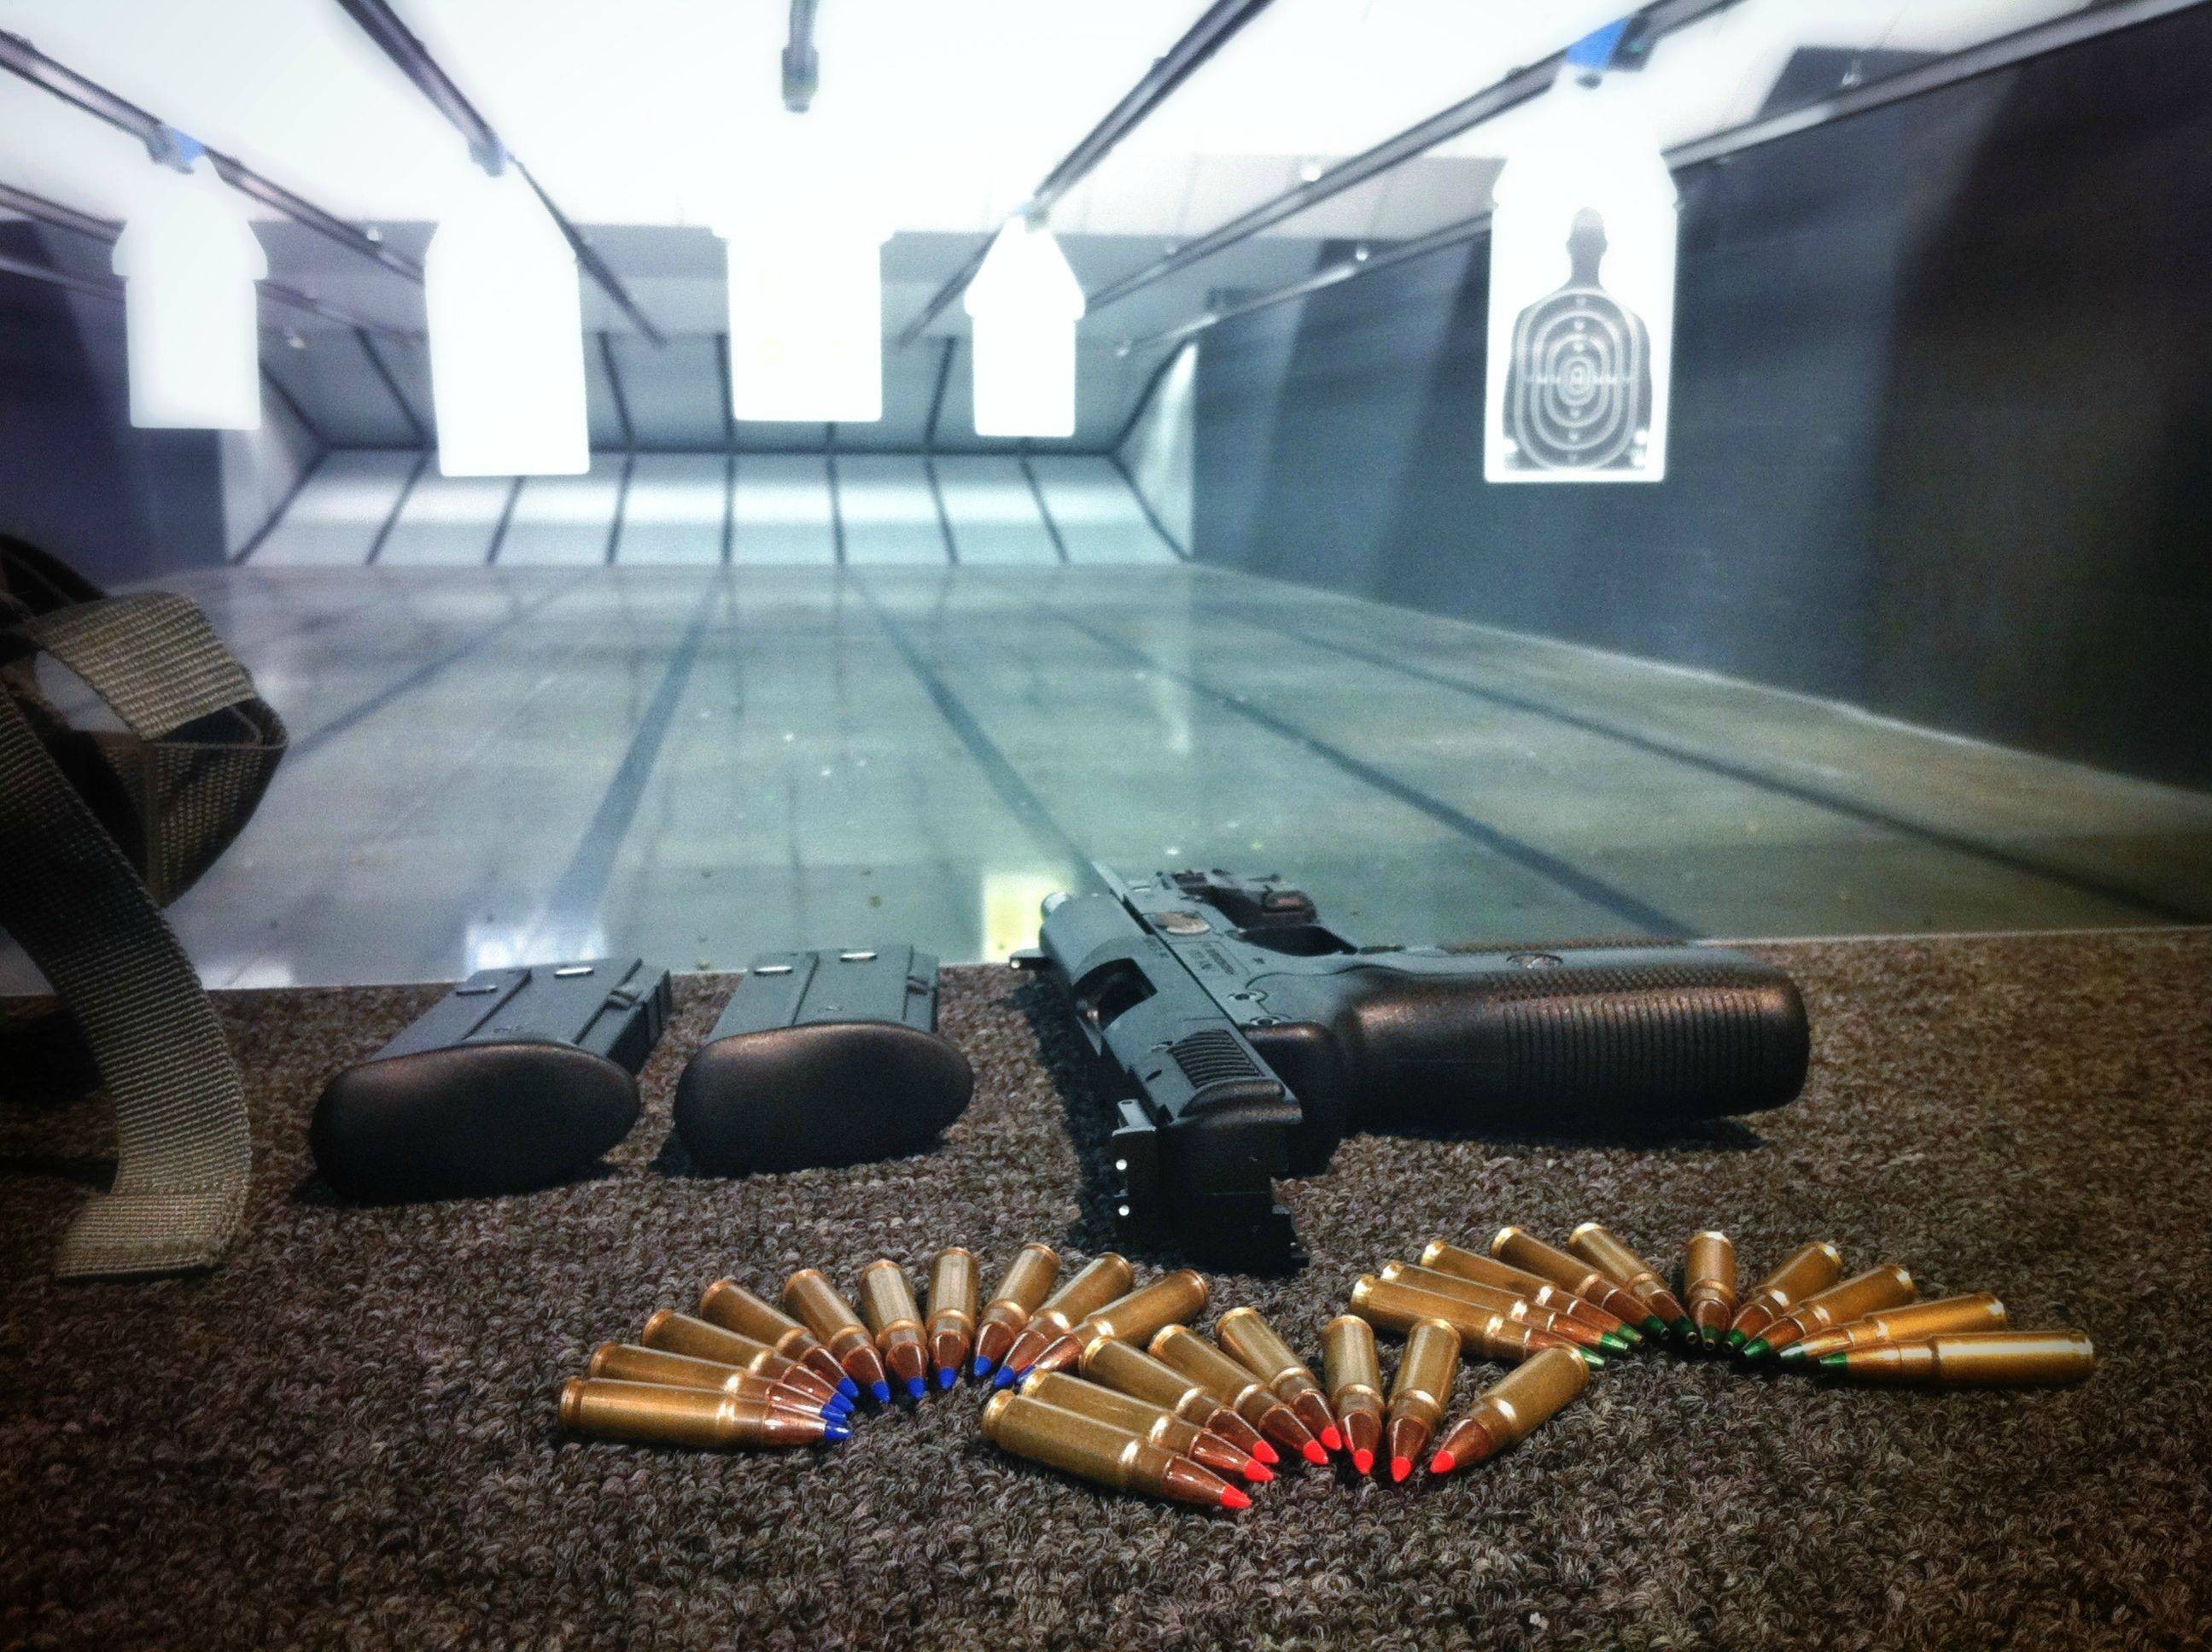 General 2591x1935 gun ammunition pistol weapon FN Five-Seven FN Herstal Belgian firearms targets firing range